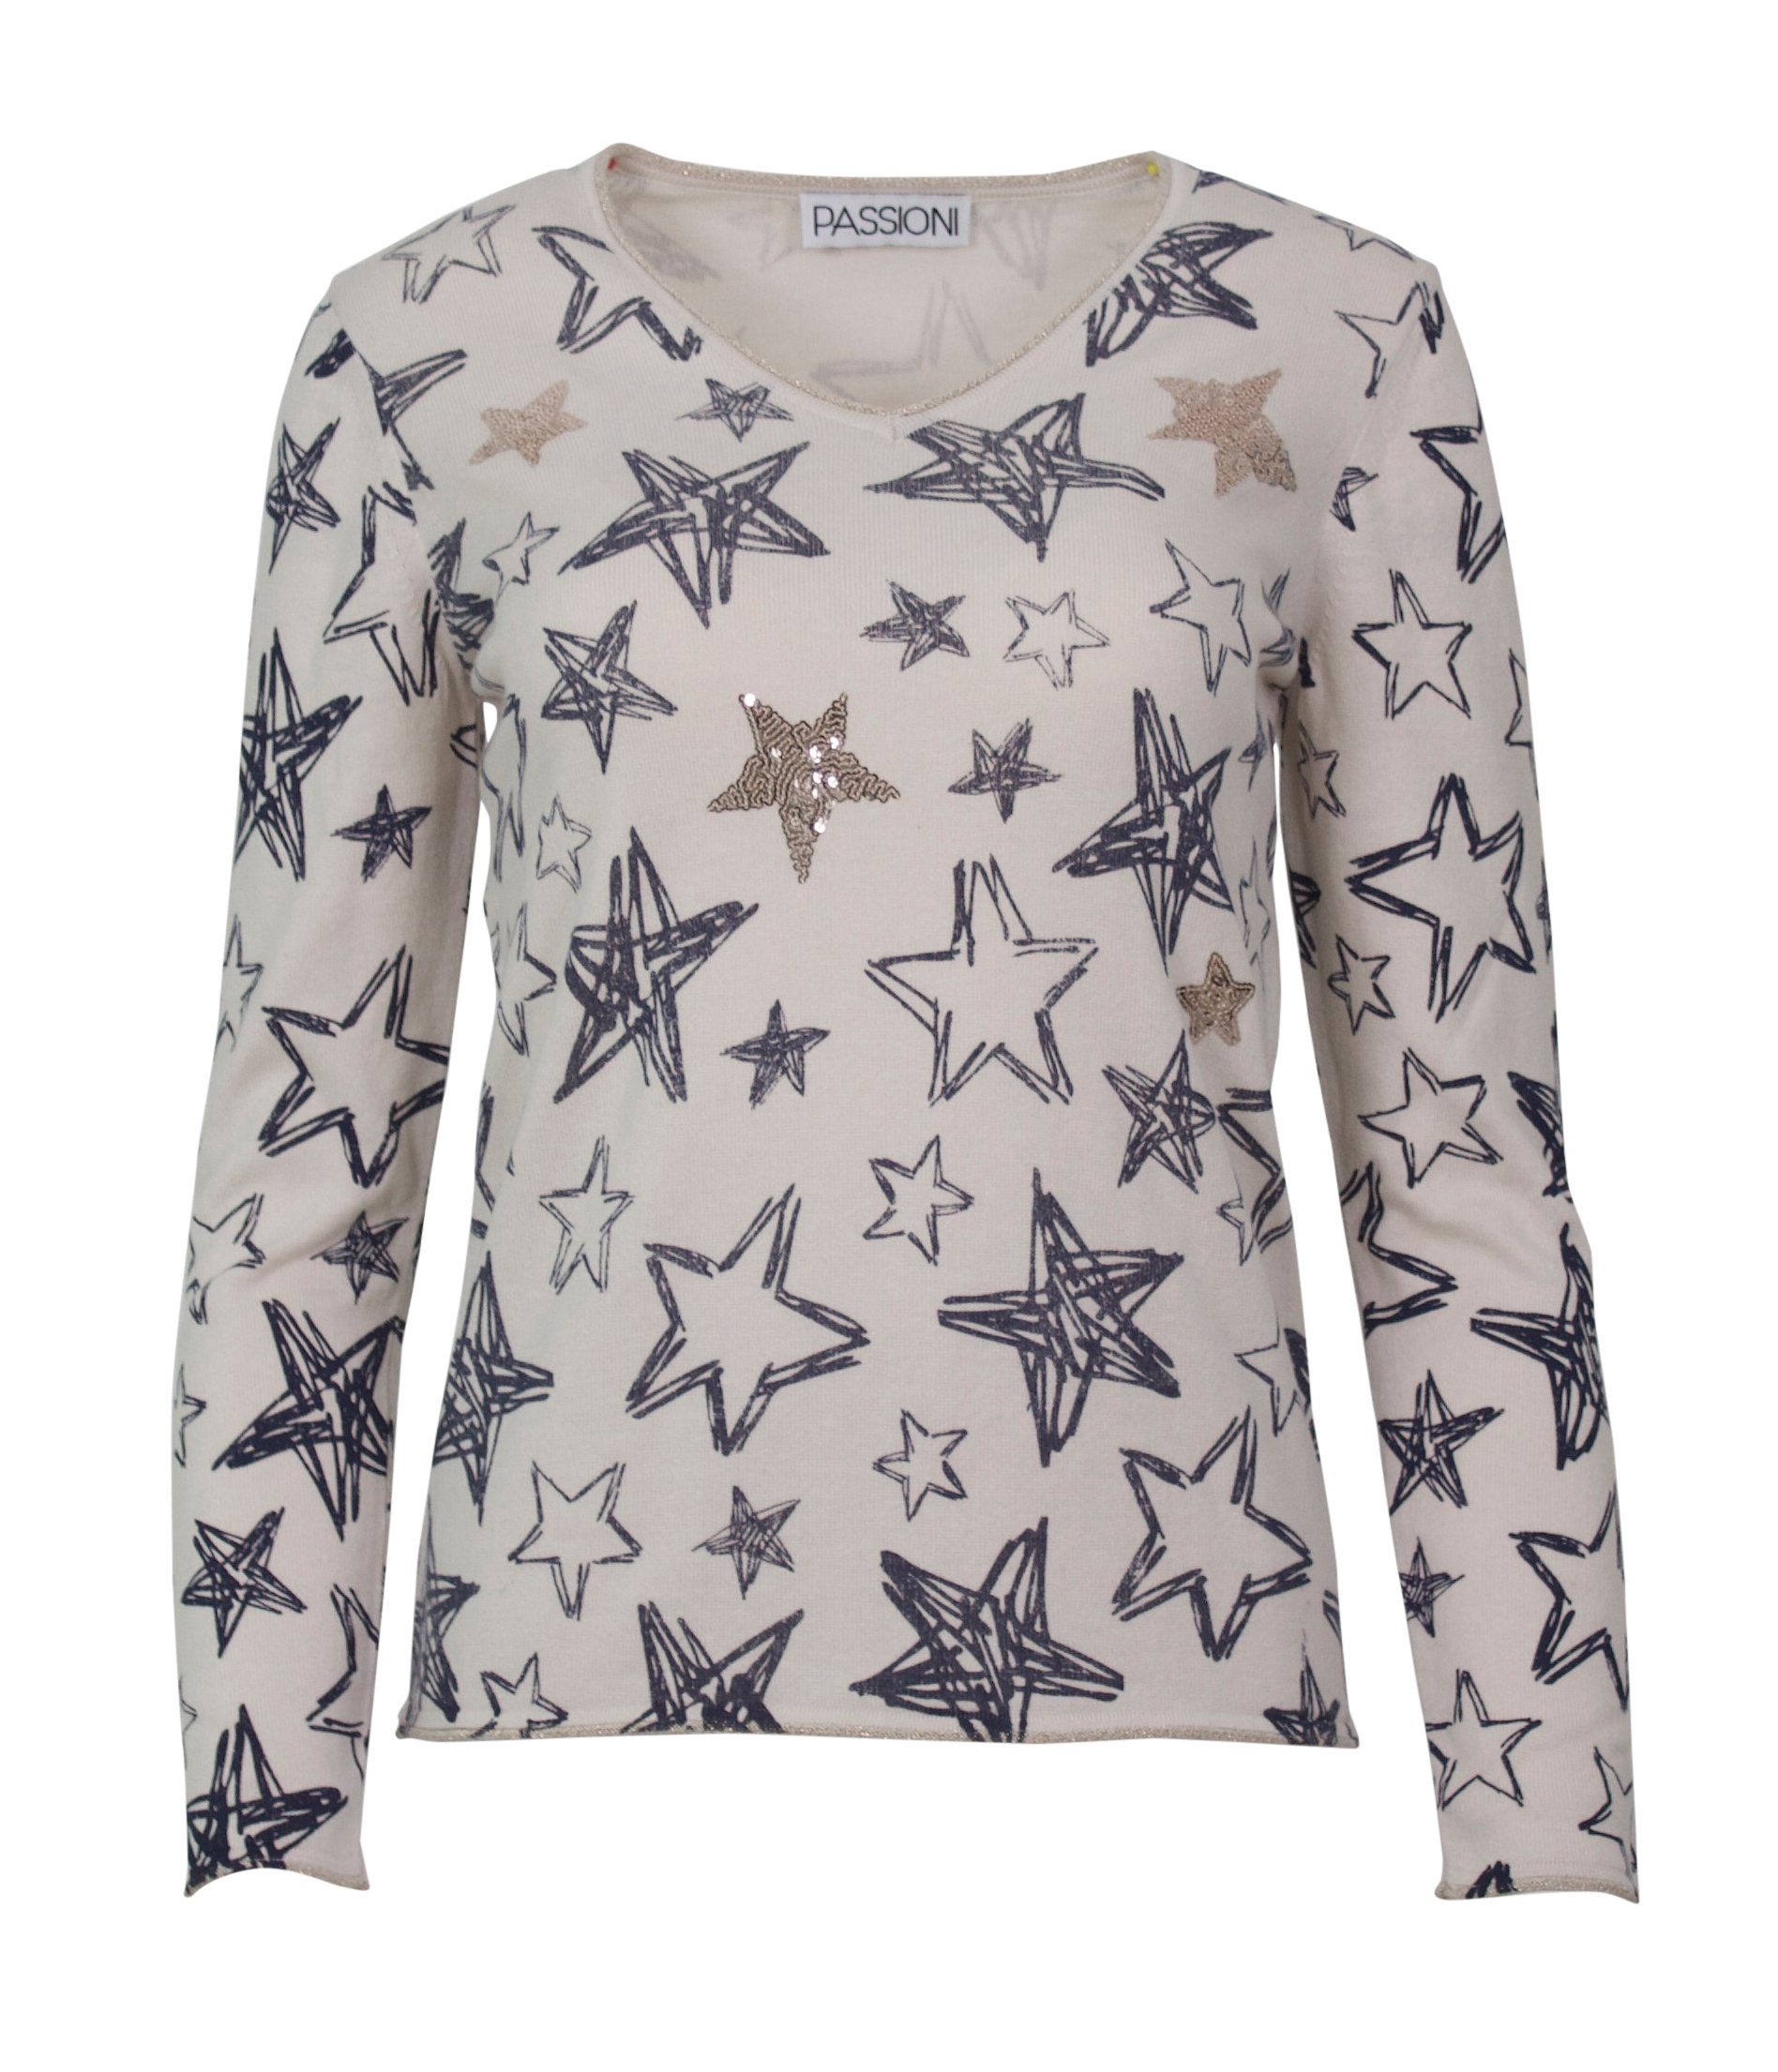 Damen Pullover Passioni Strickpullover Pullover mit Sternenprint casual bedruckt